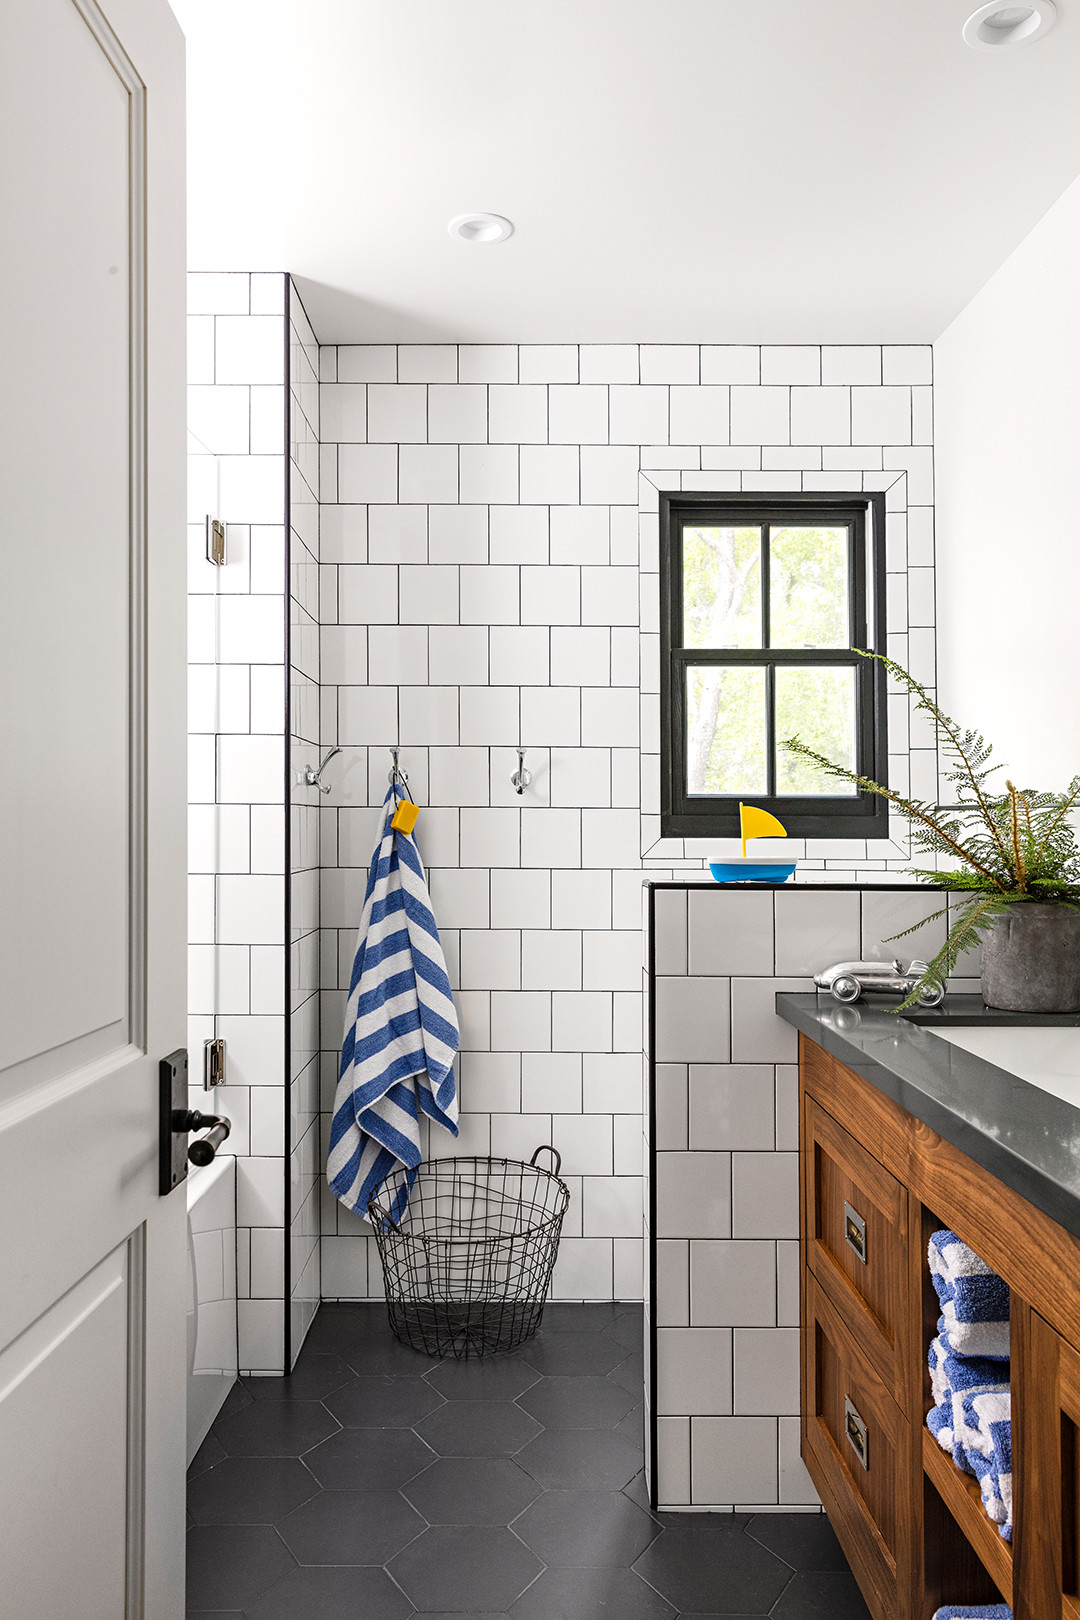 Subway Tile Bathroom Design
 Our Best Bathroom Subway Tile Ideas